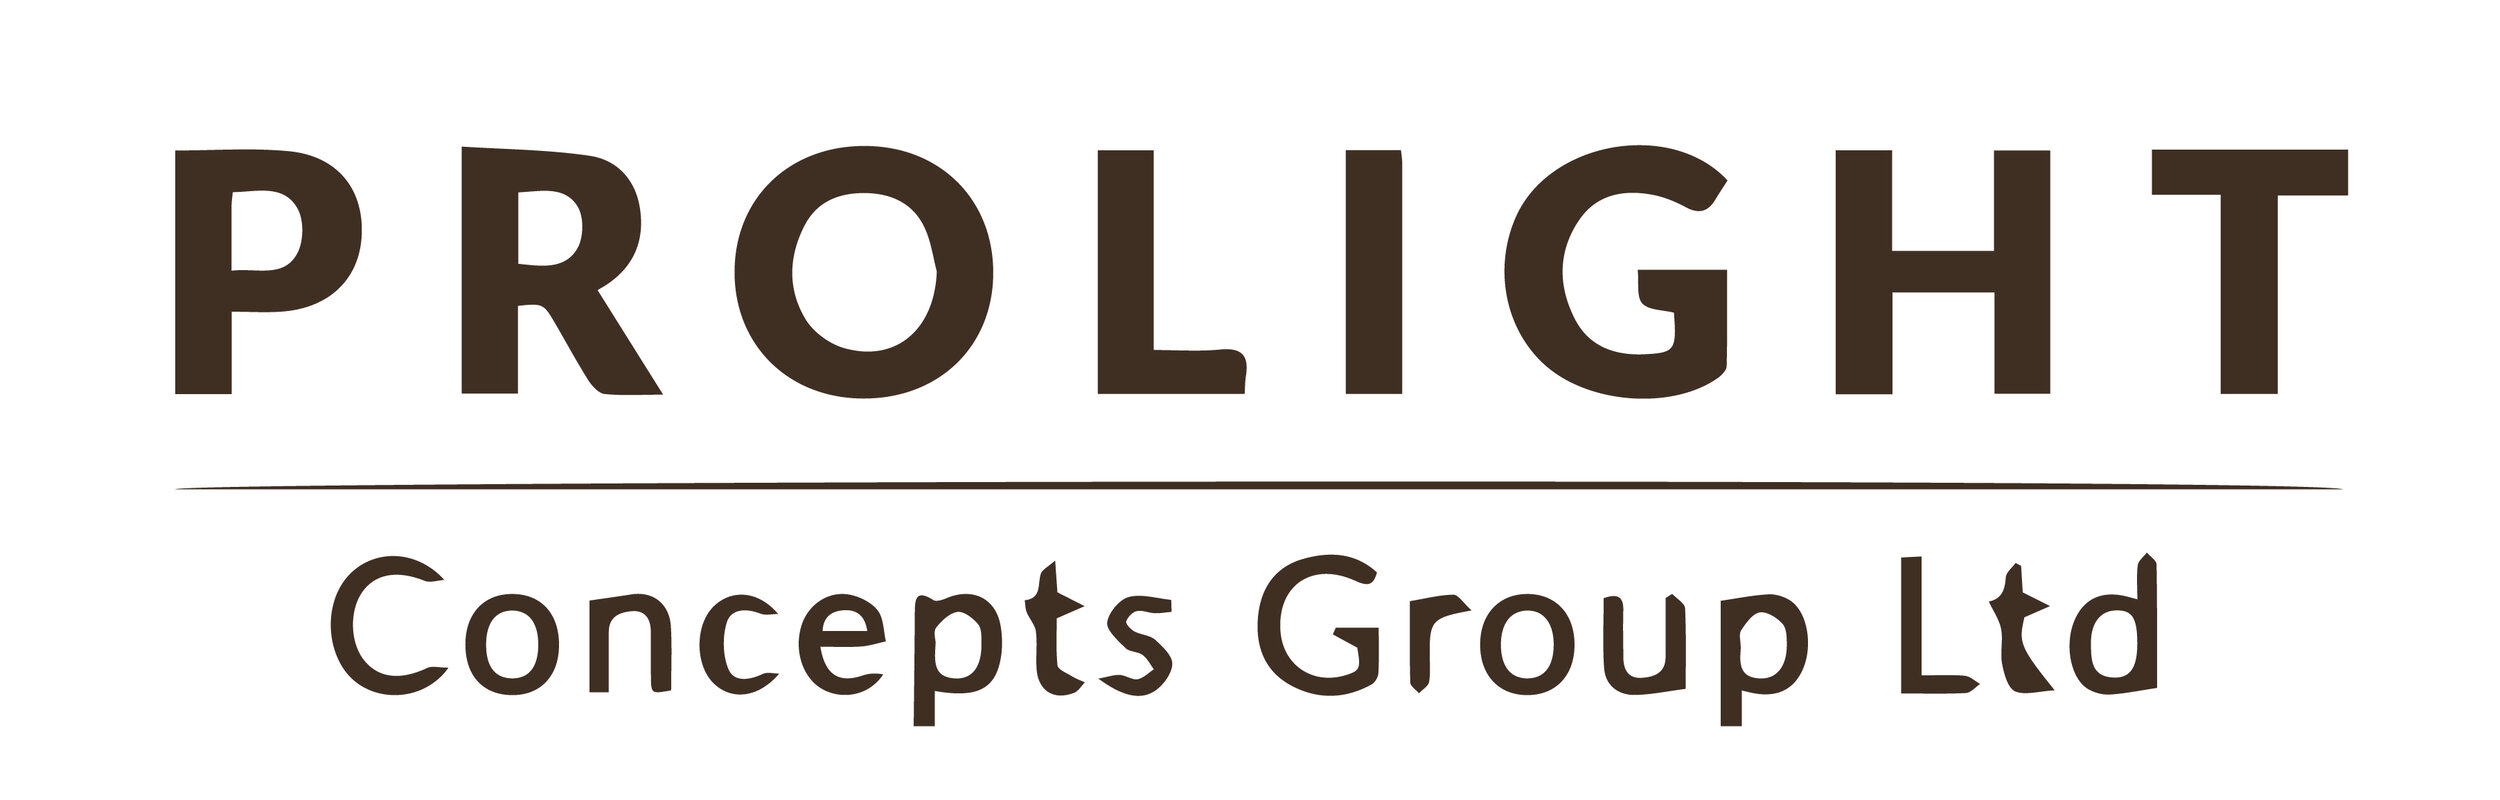 Prolight Concepts group brown logo.jpg